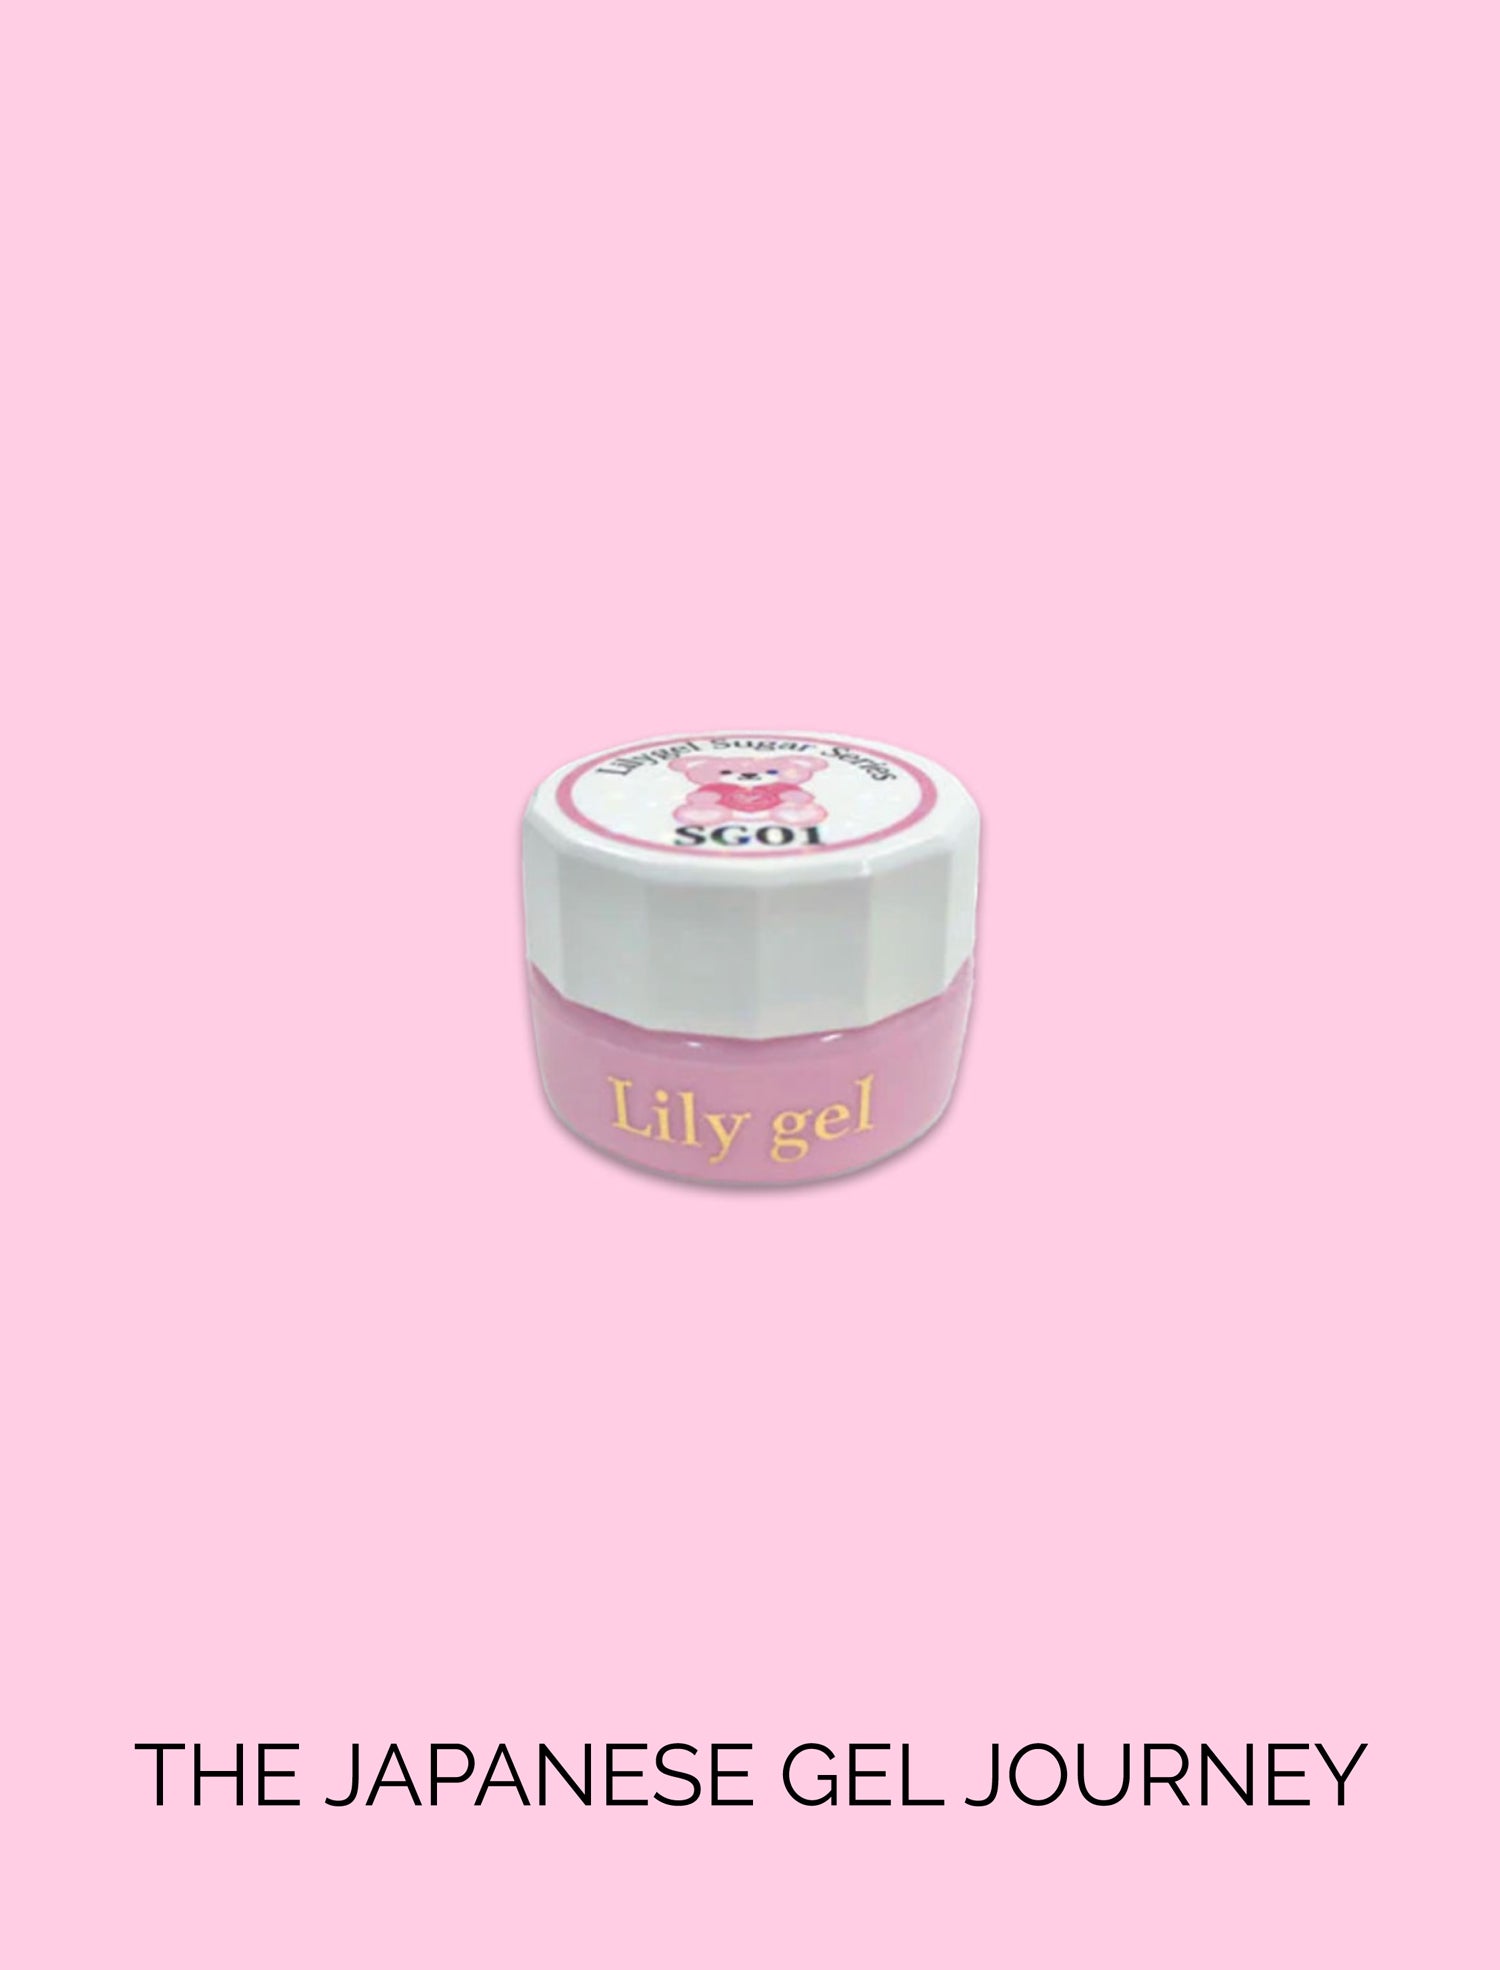 Boutique Korea Kirakira Pink Glow Powder – Zillabeau